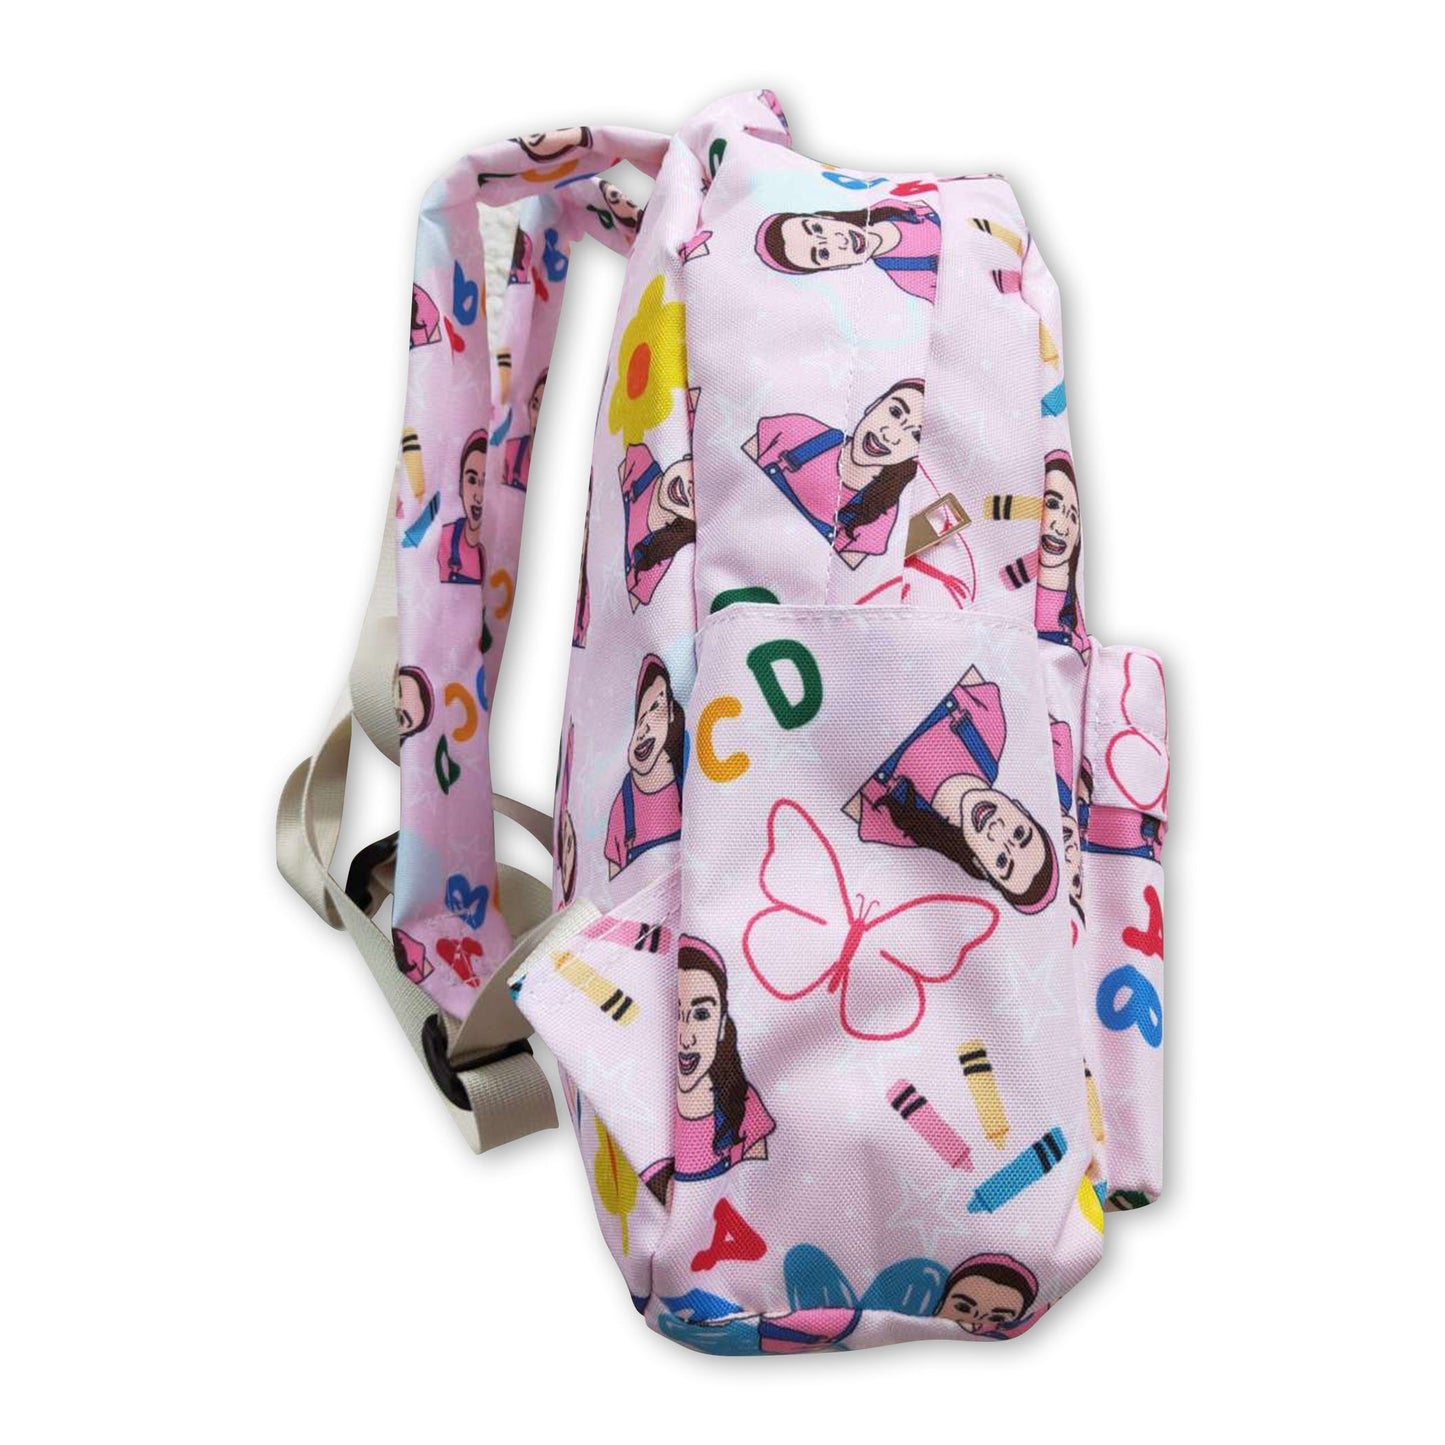 ABC teacher butterfly girls back to school backpack